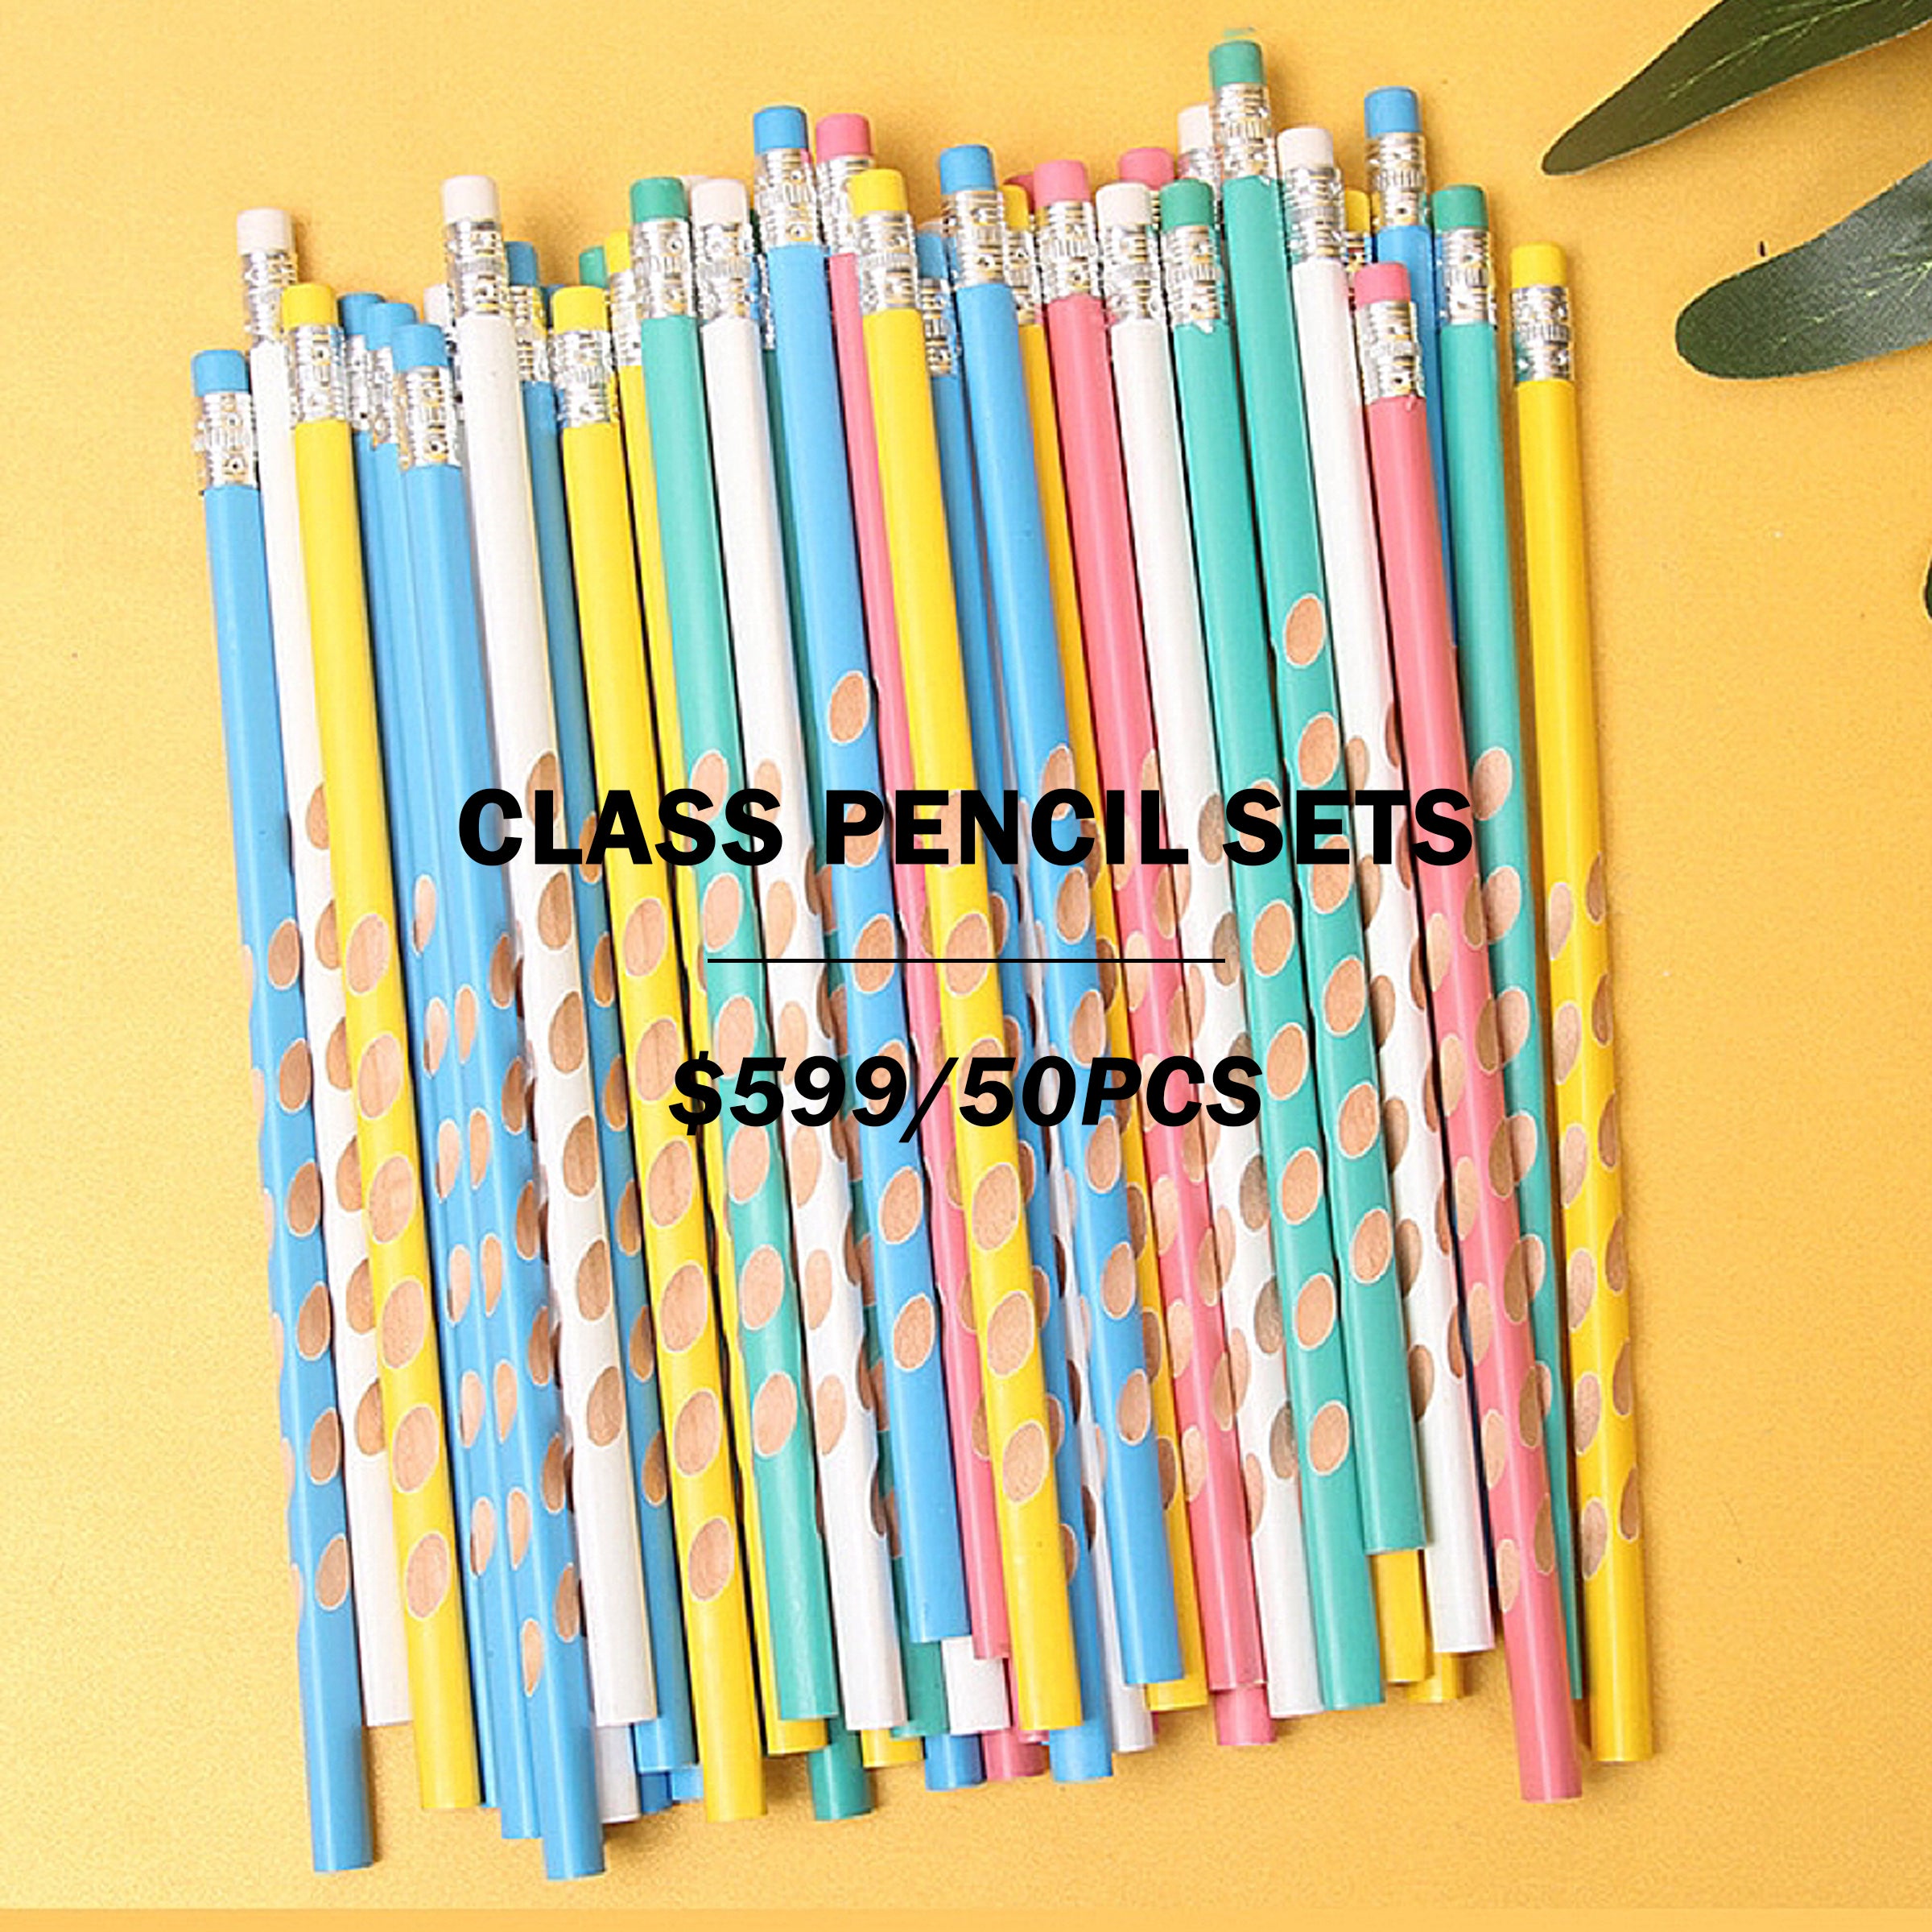 【COMPANY GIFTS】Multicolor stationery pen & eraser pencil printing logo x 50 pcs | 馬卡龍色鉛筆50件套訂製 橡皮頭鉛筆訂製